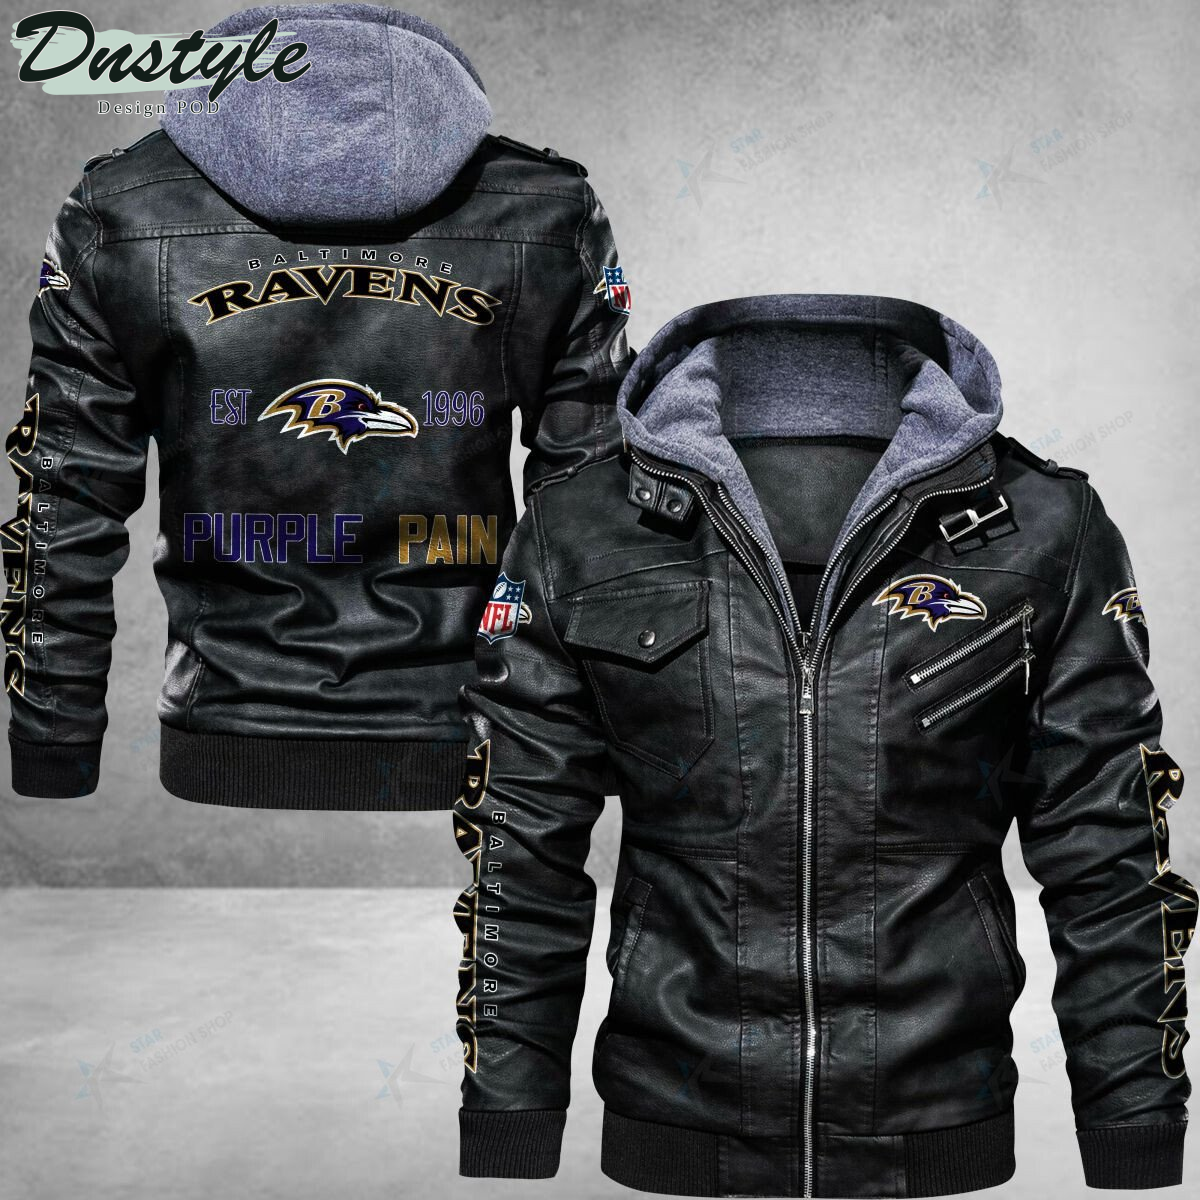 Baltimore Ravens Purple Pain Leather Jacket